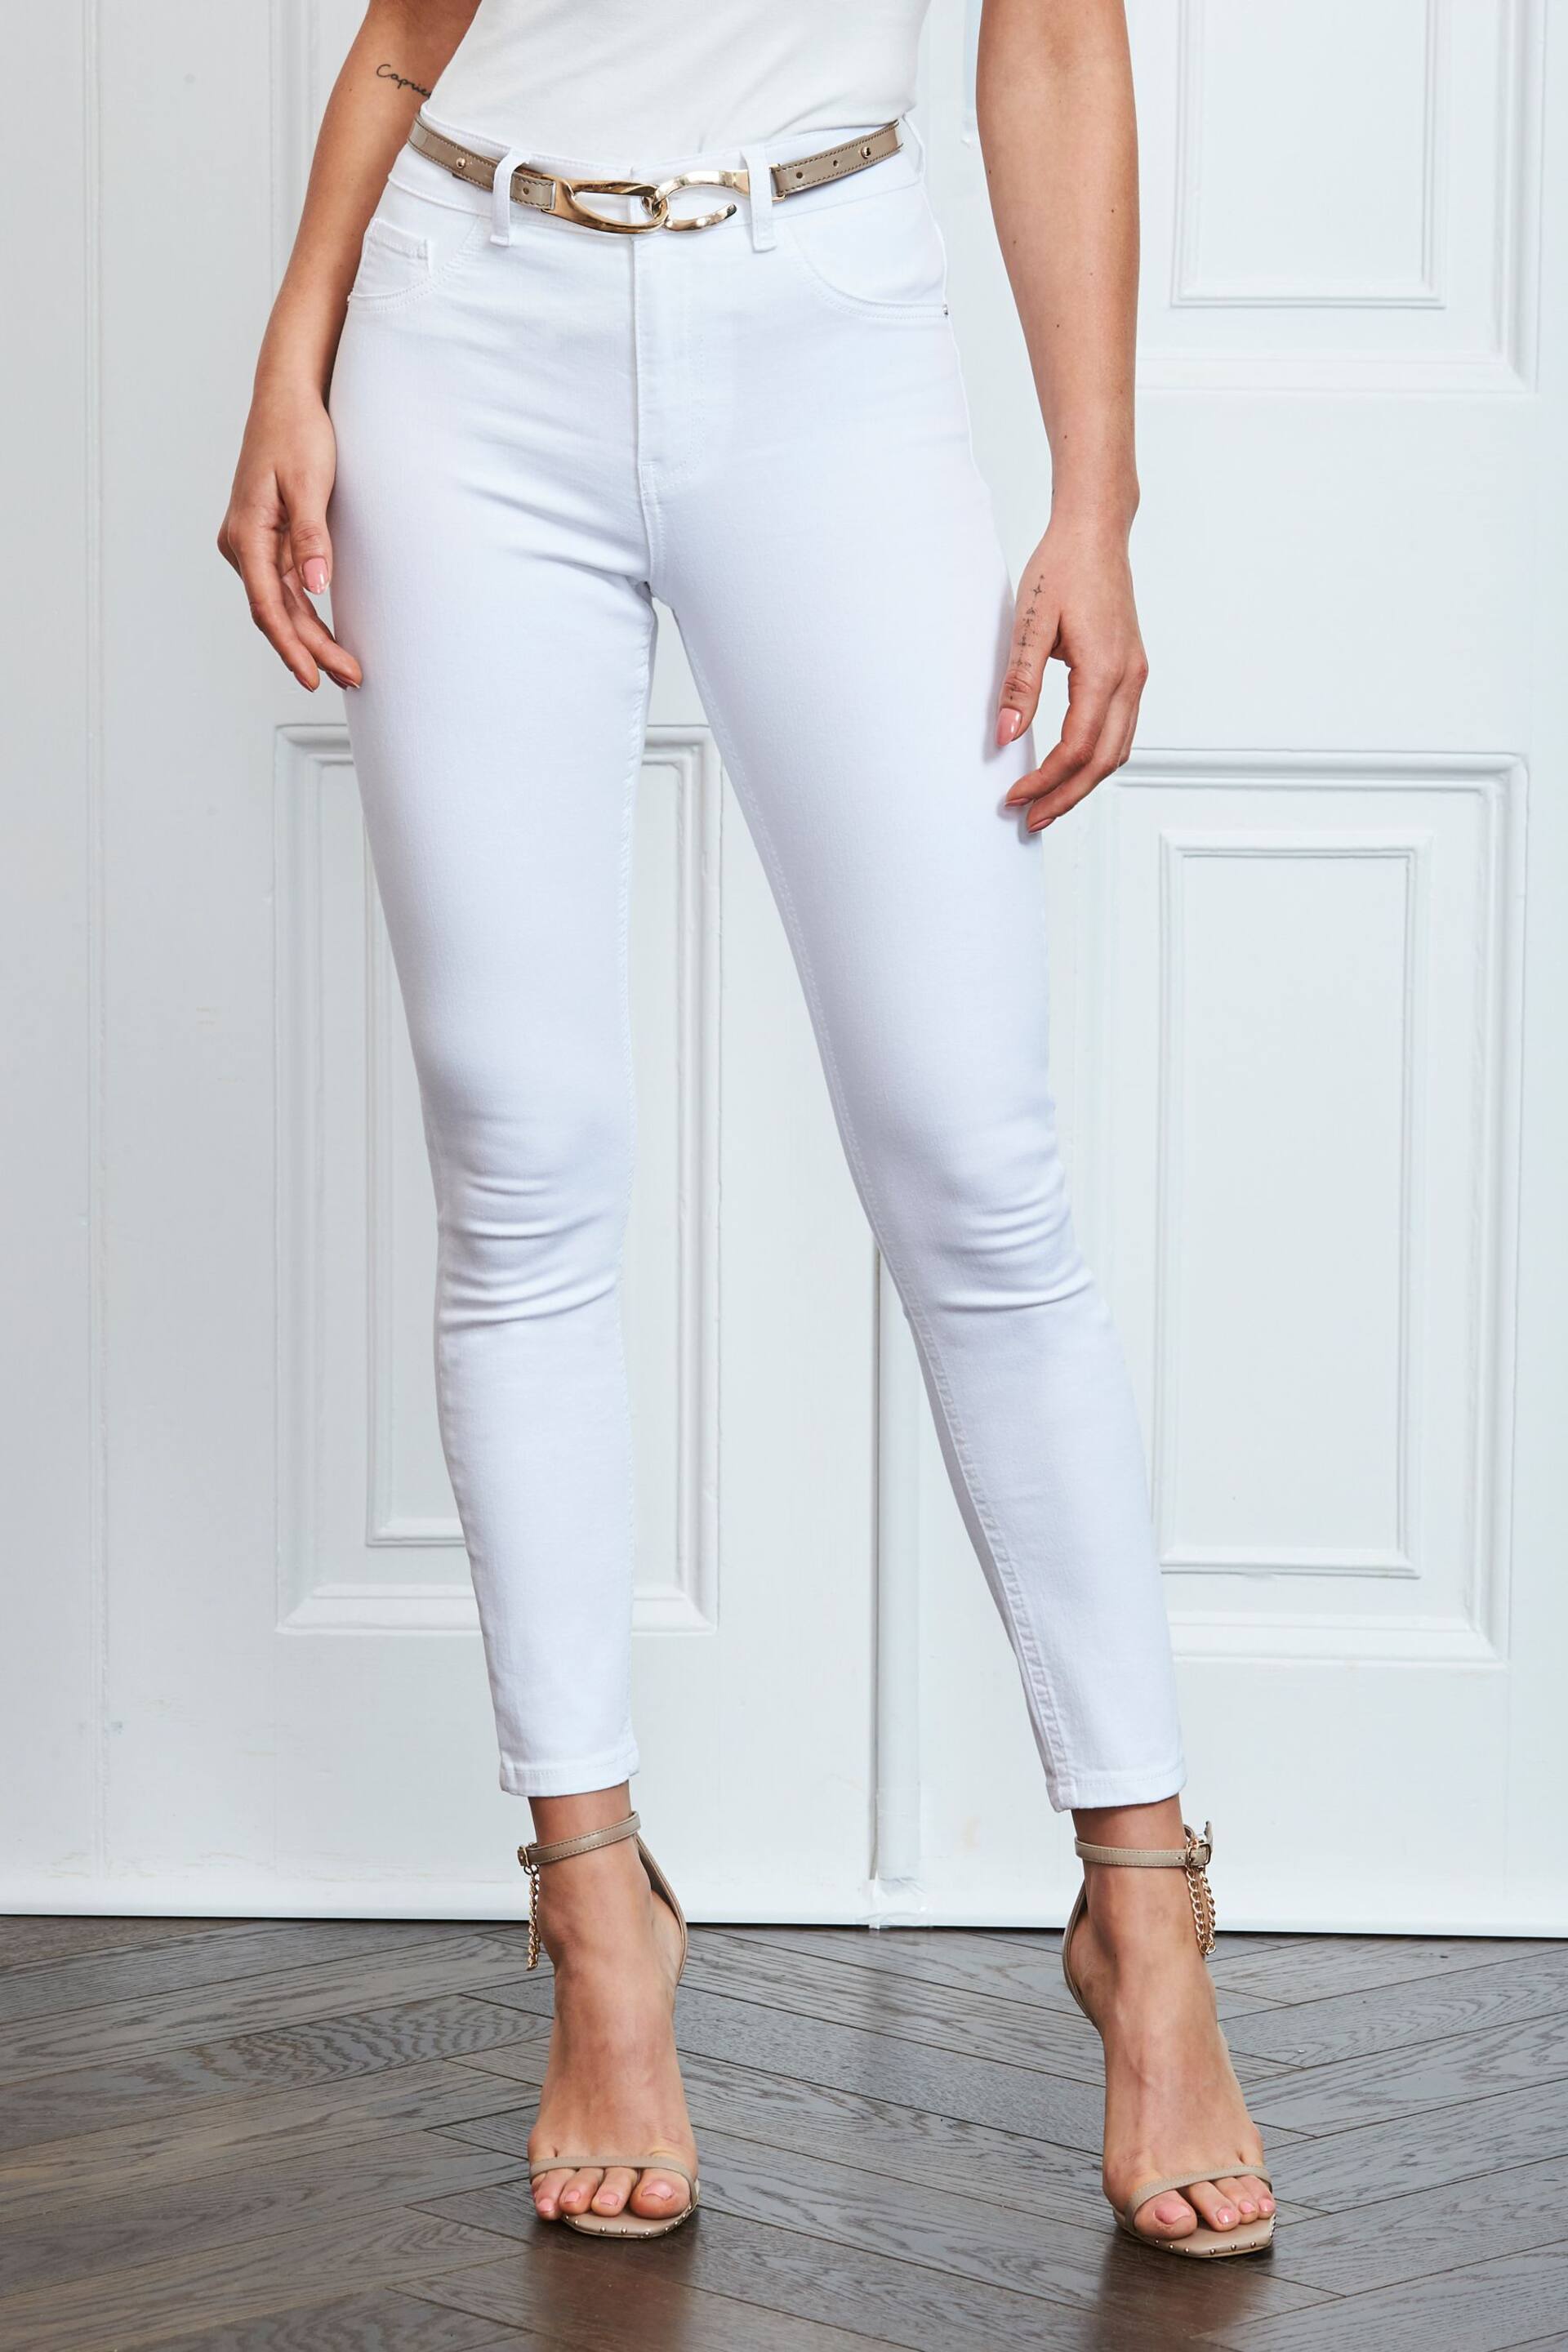 Sosandar White Tall Perfect Skinny Jeans - Image 3 of 5